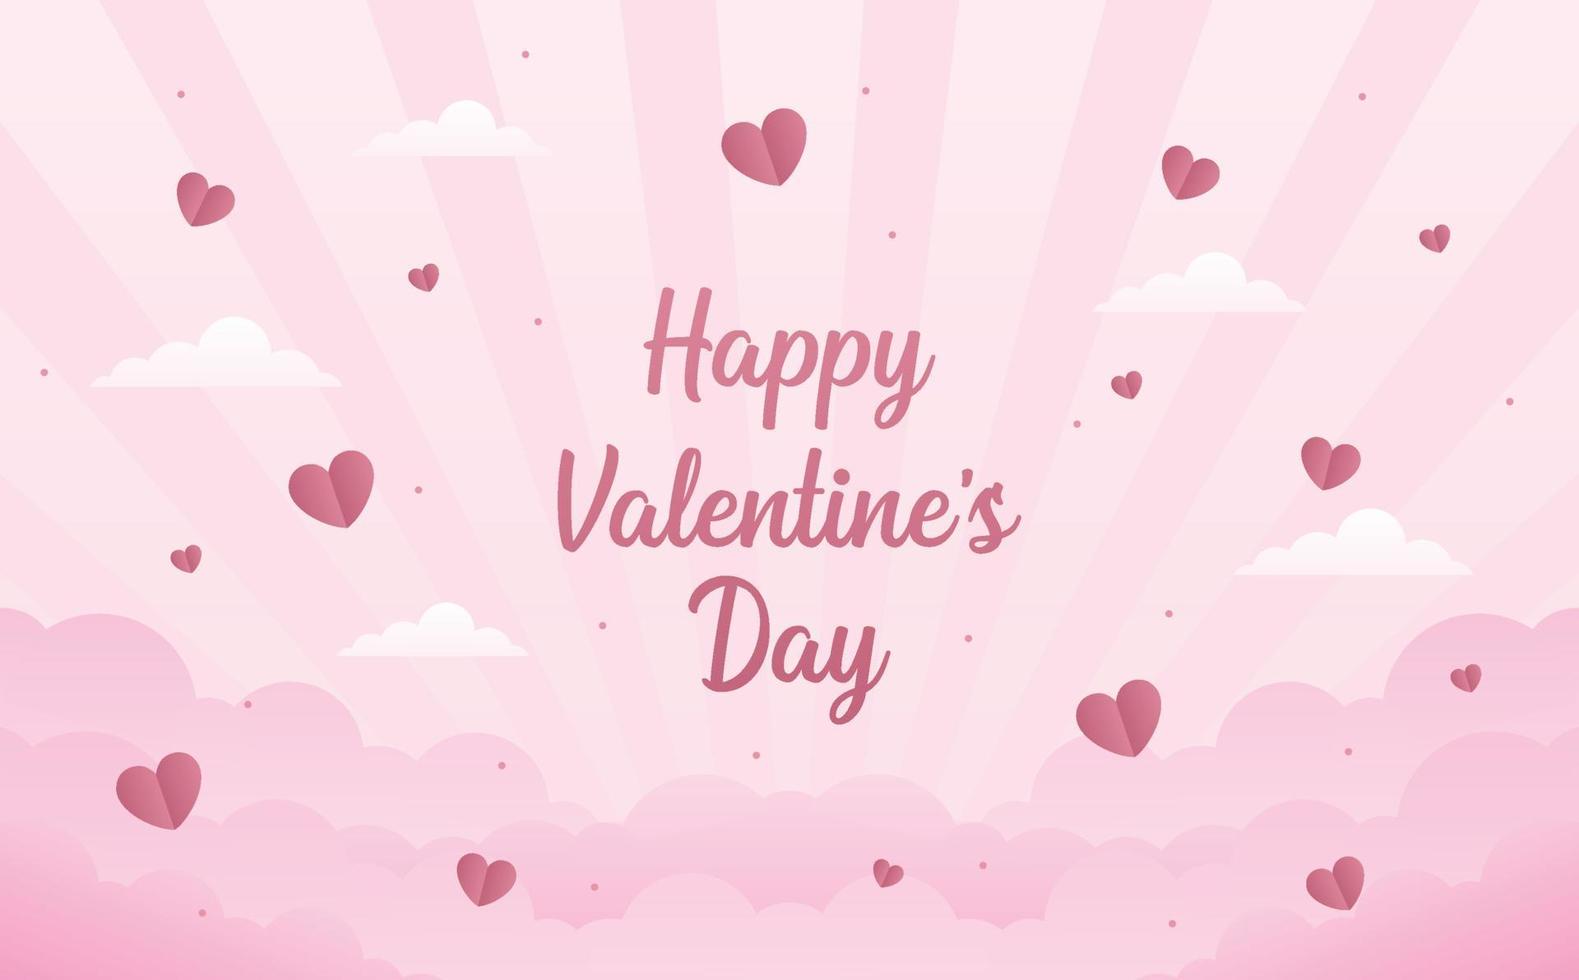 happy valentines day background vector